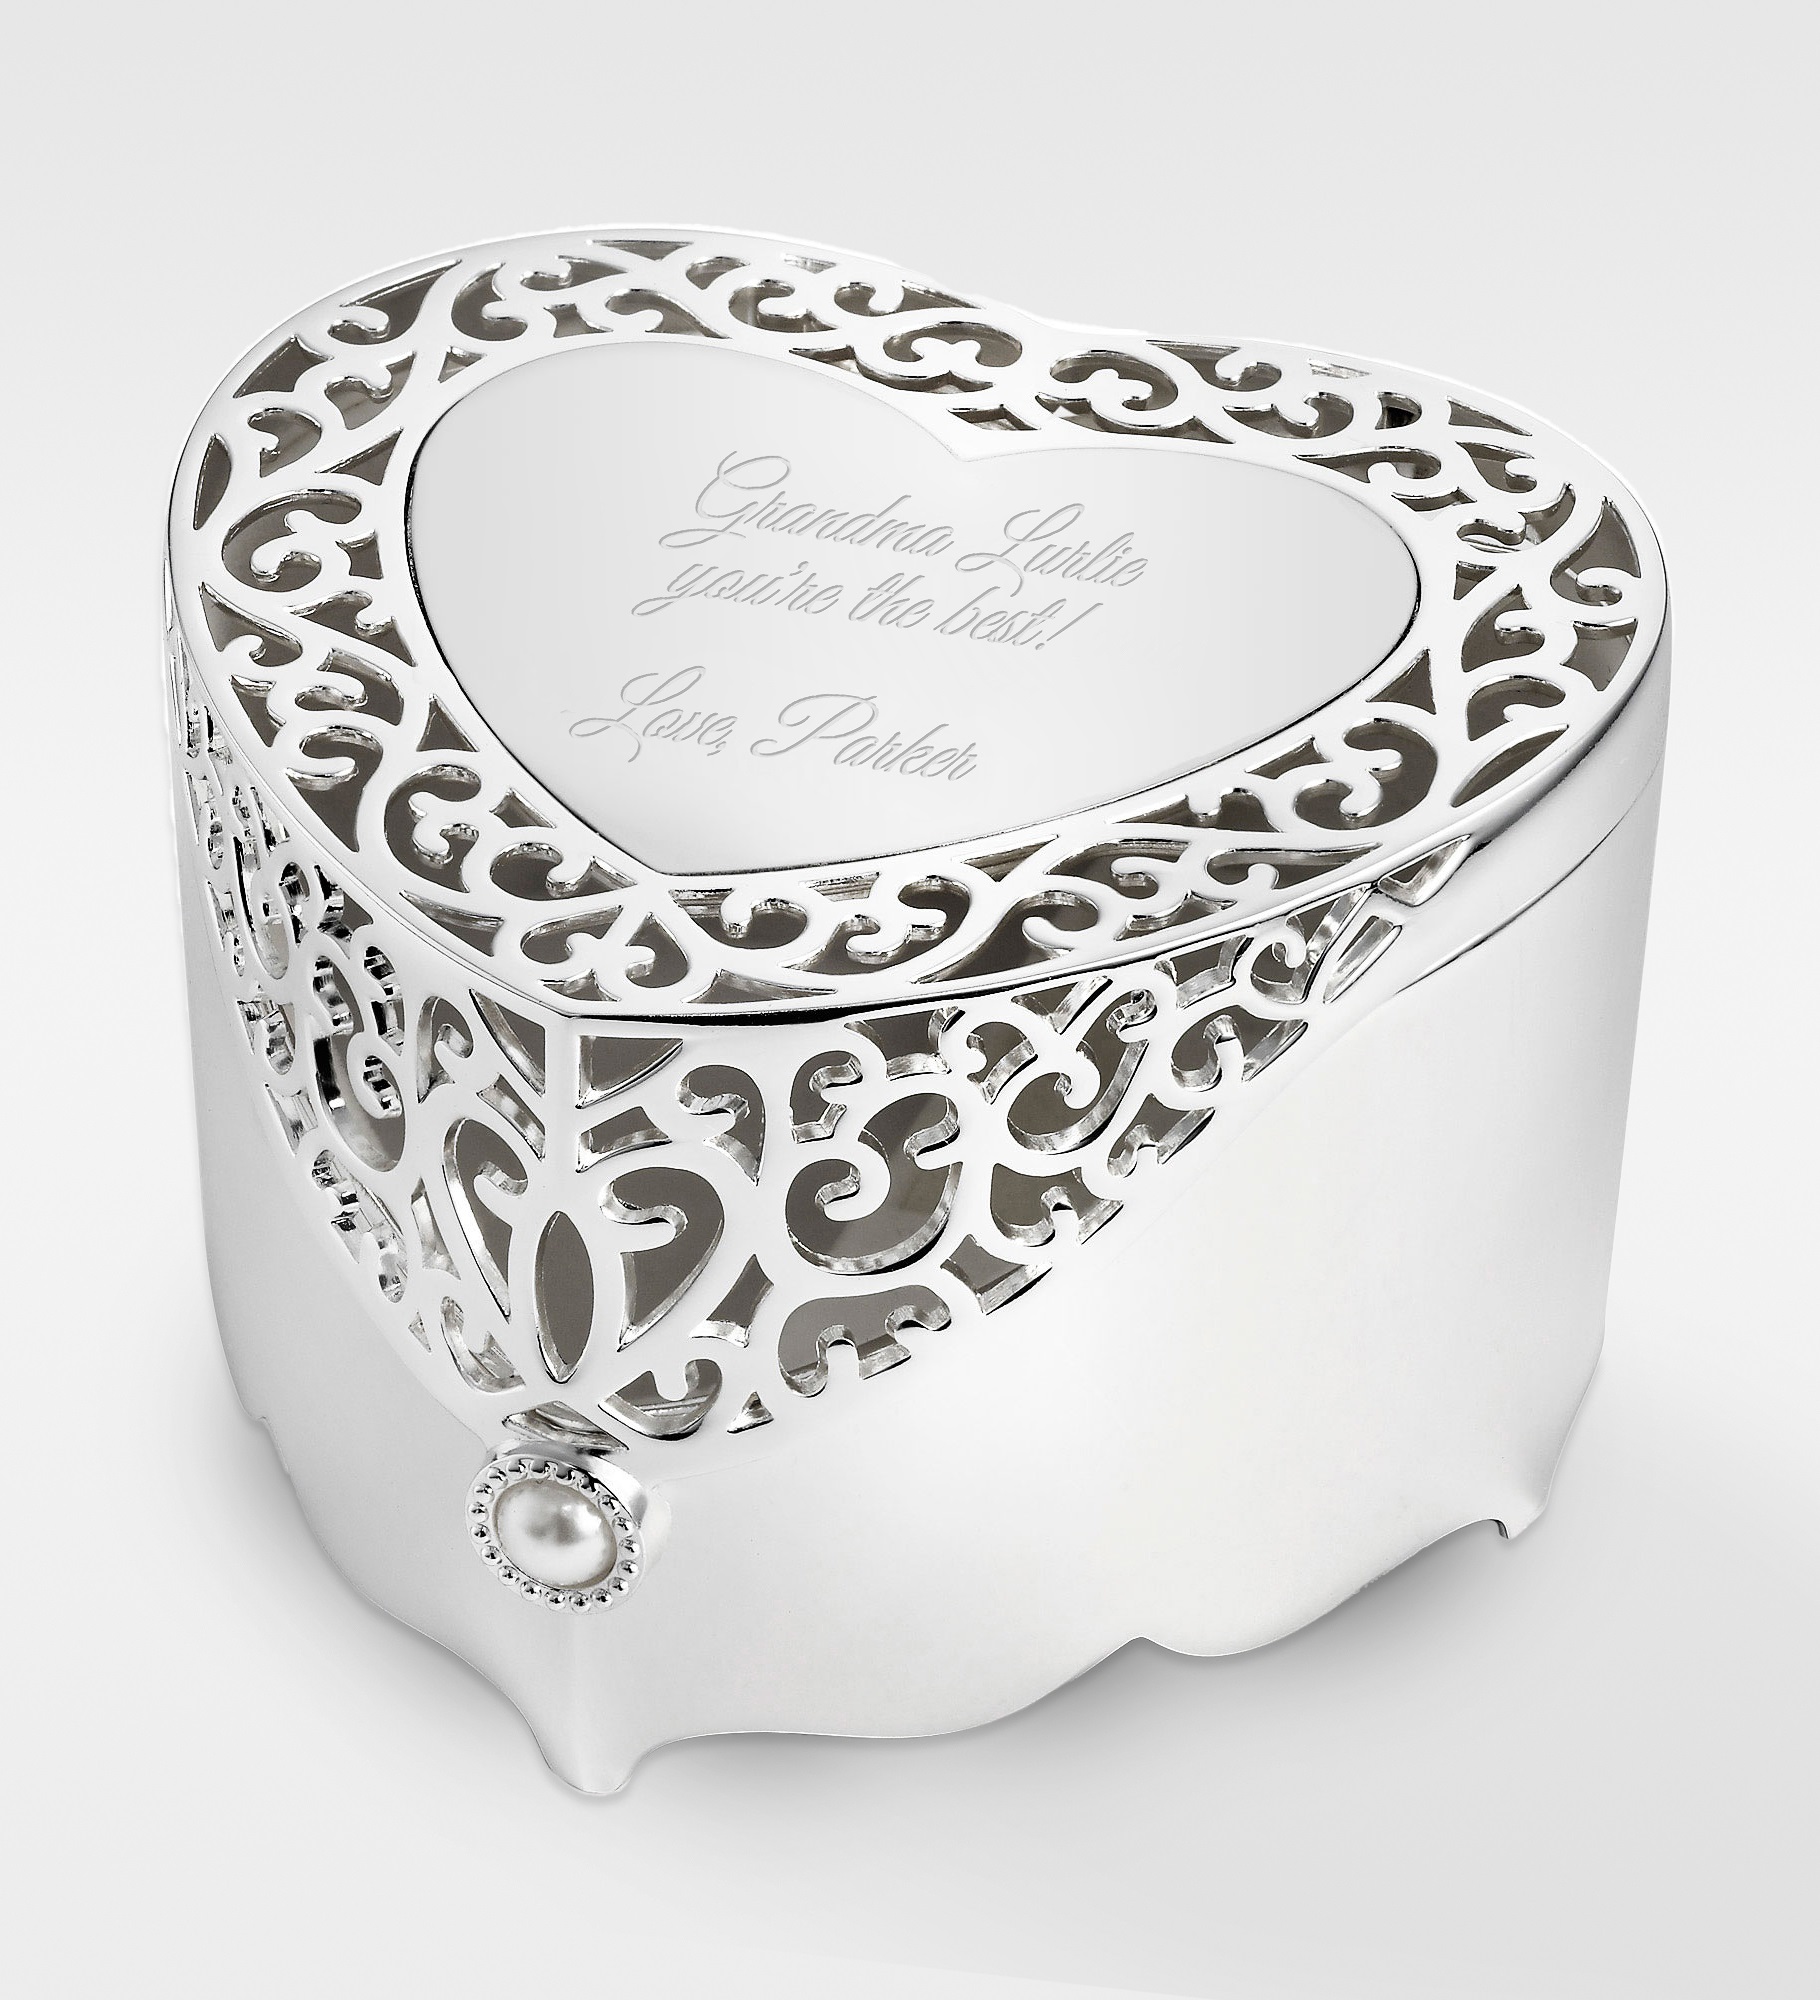  Engraved Scroll Heart Keepsake Box for Grandma 